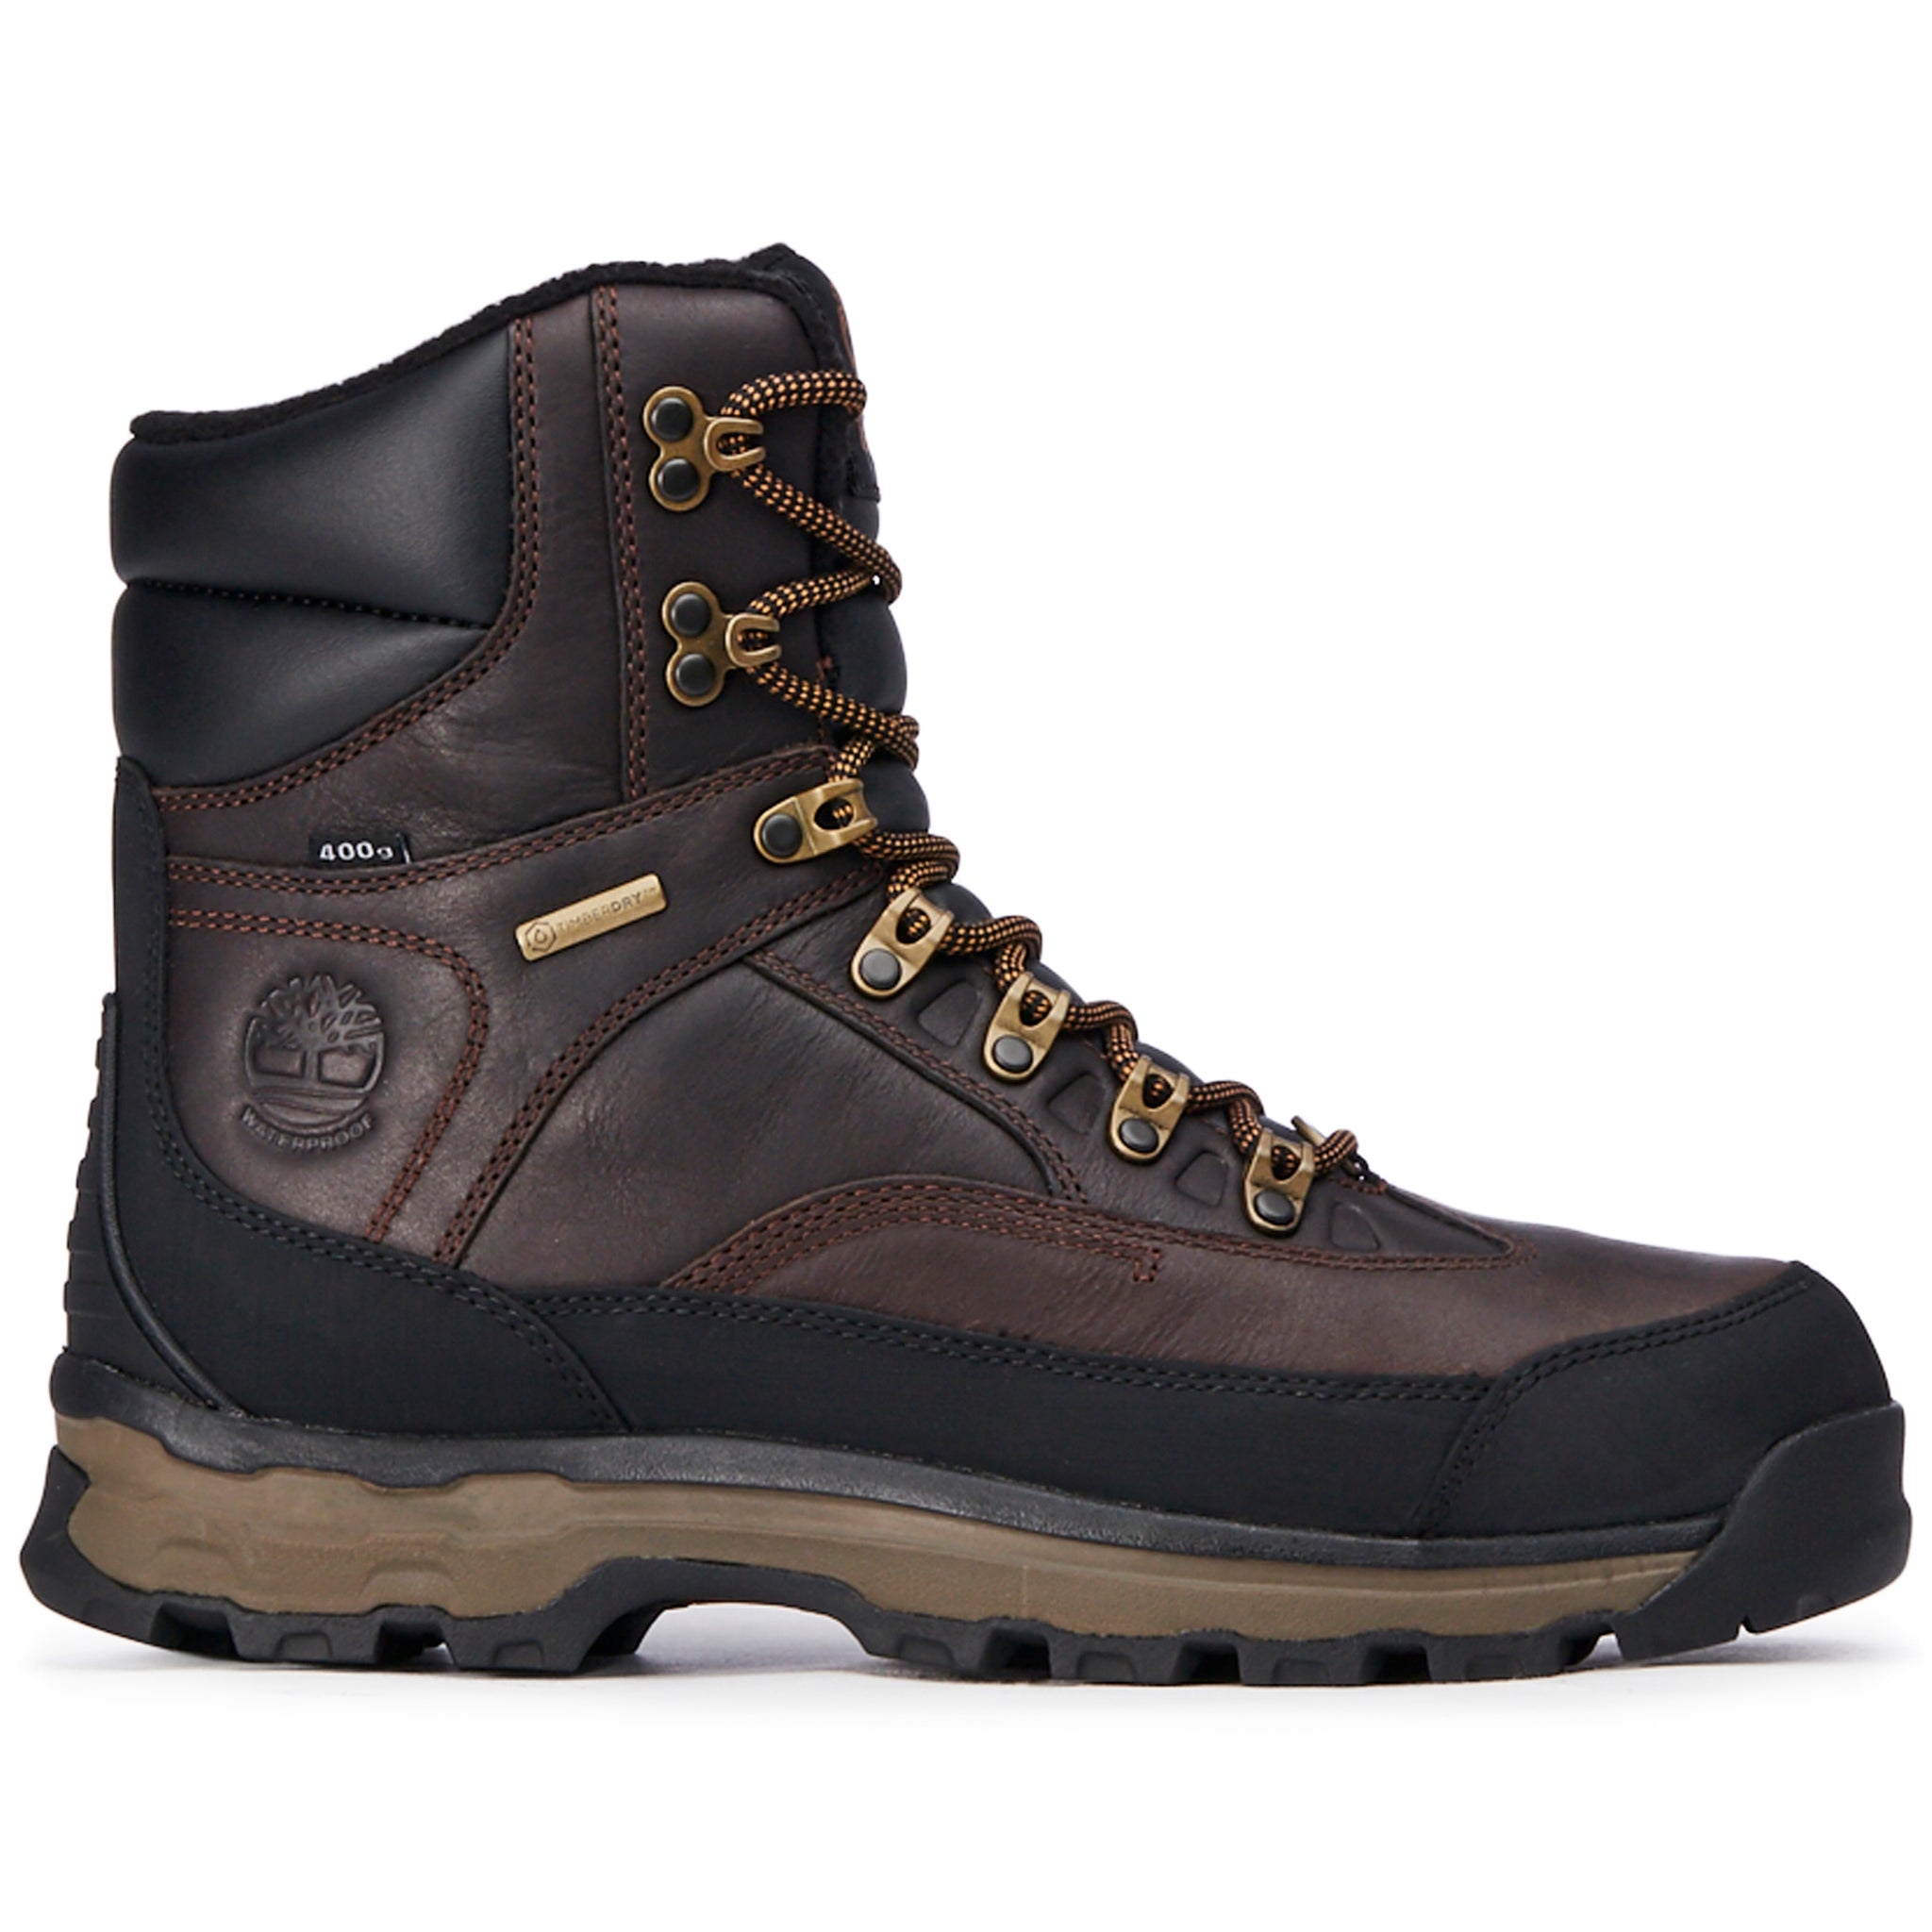 men's timberland waterproof hiking boots